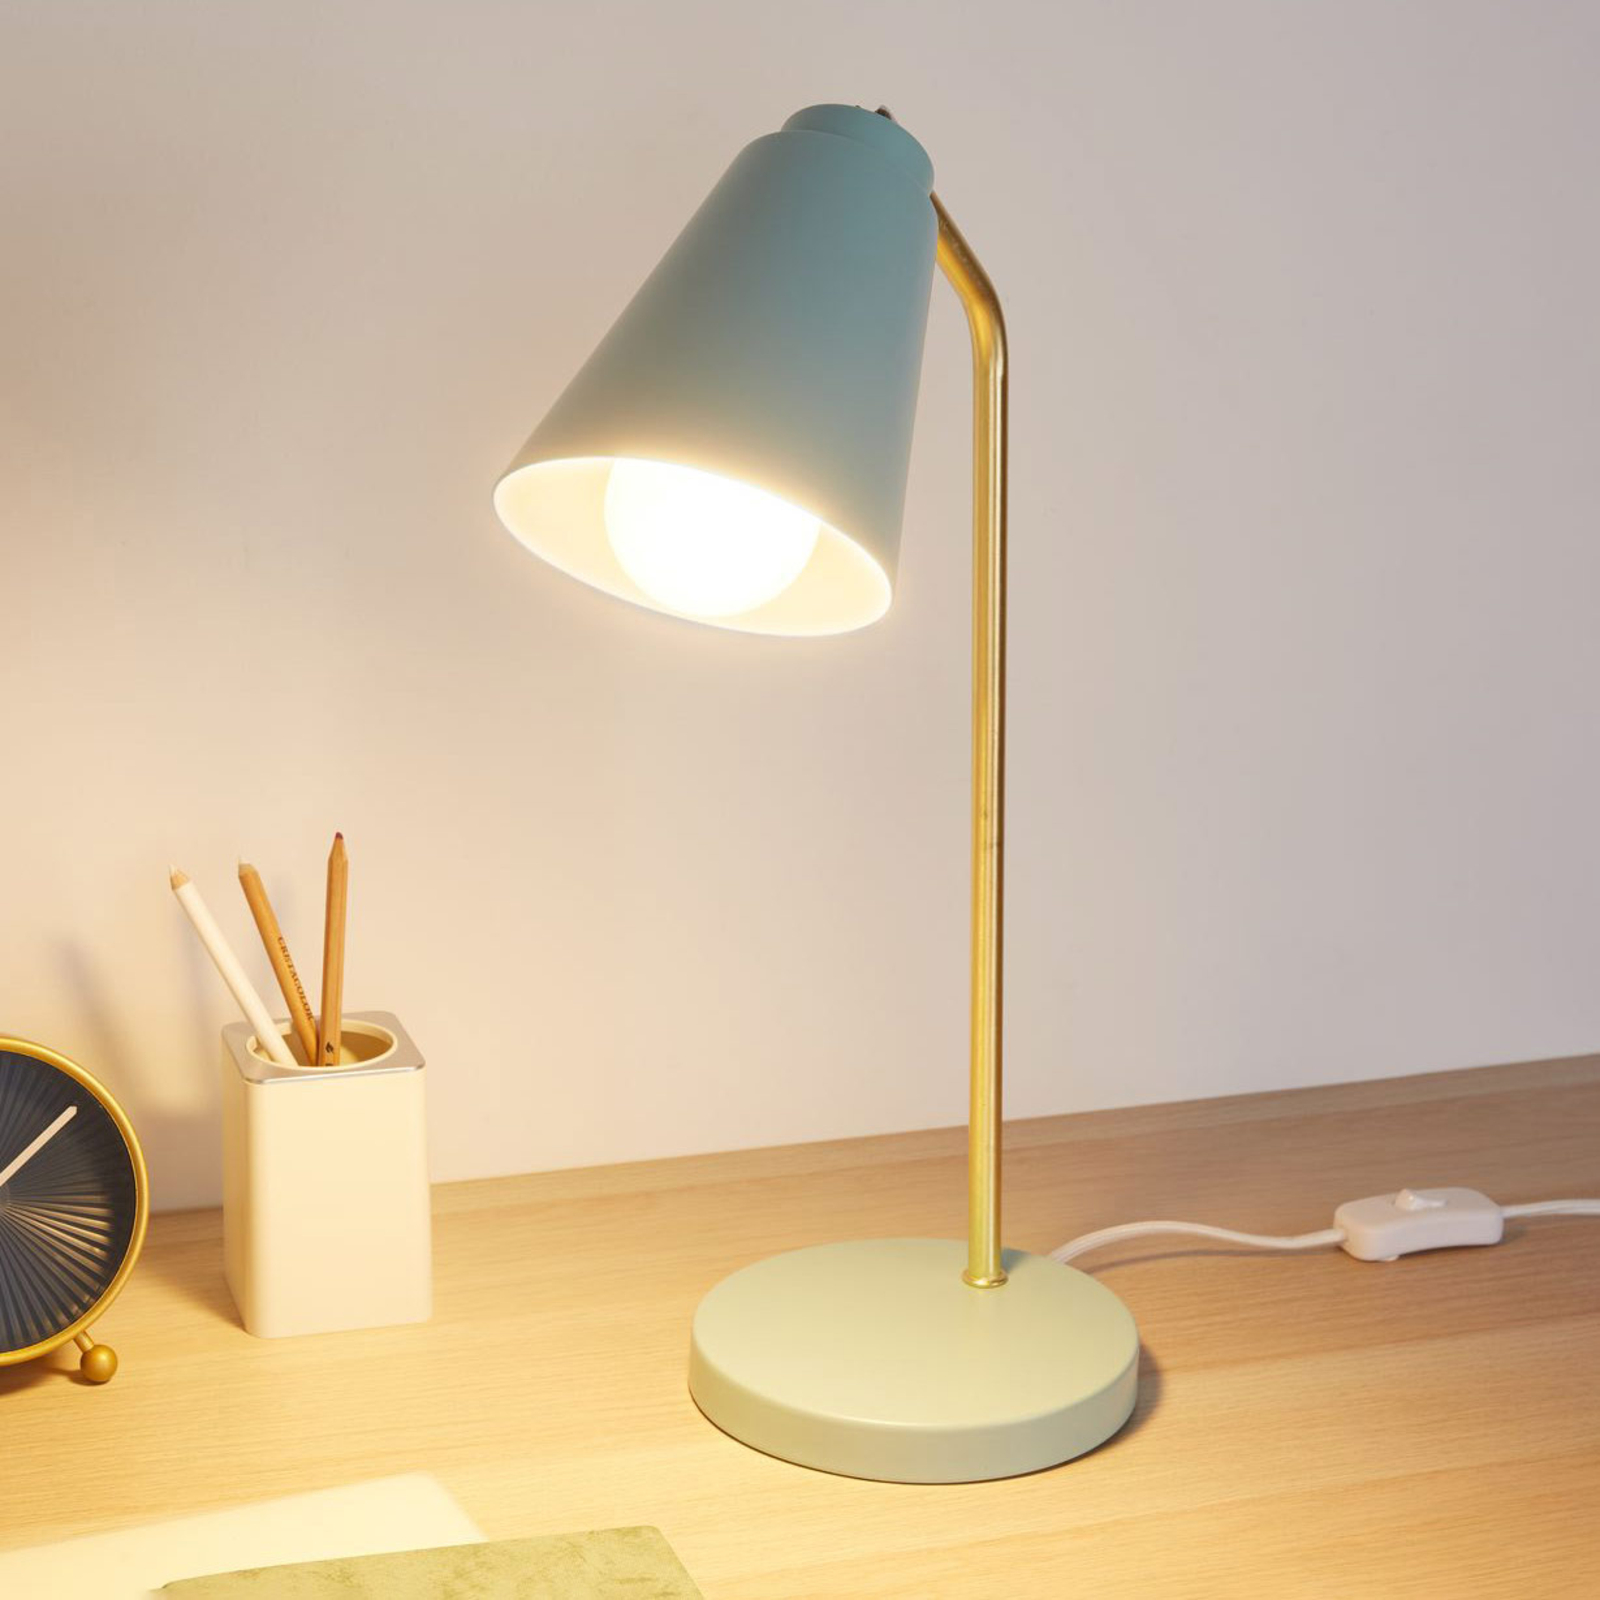 Pauleen True Charm table lamp in light blue/gold